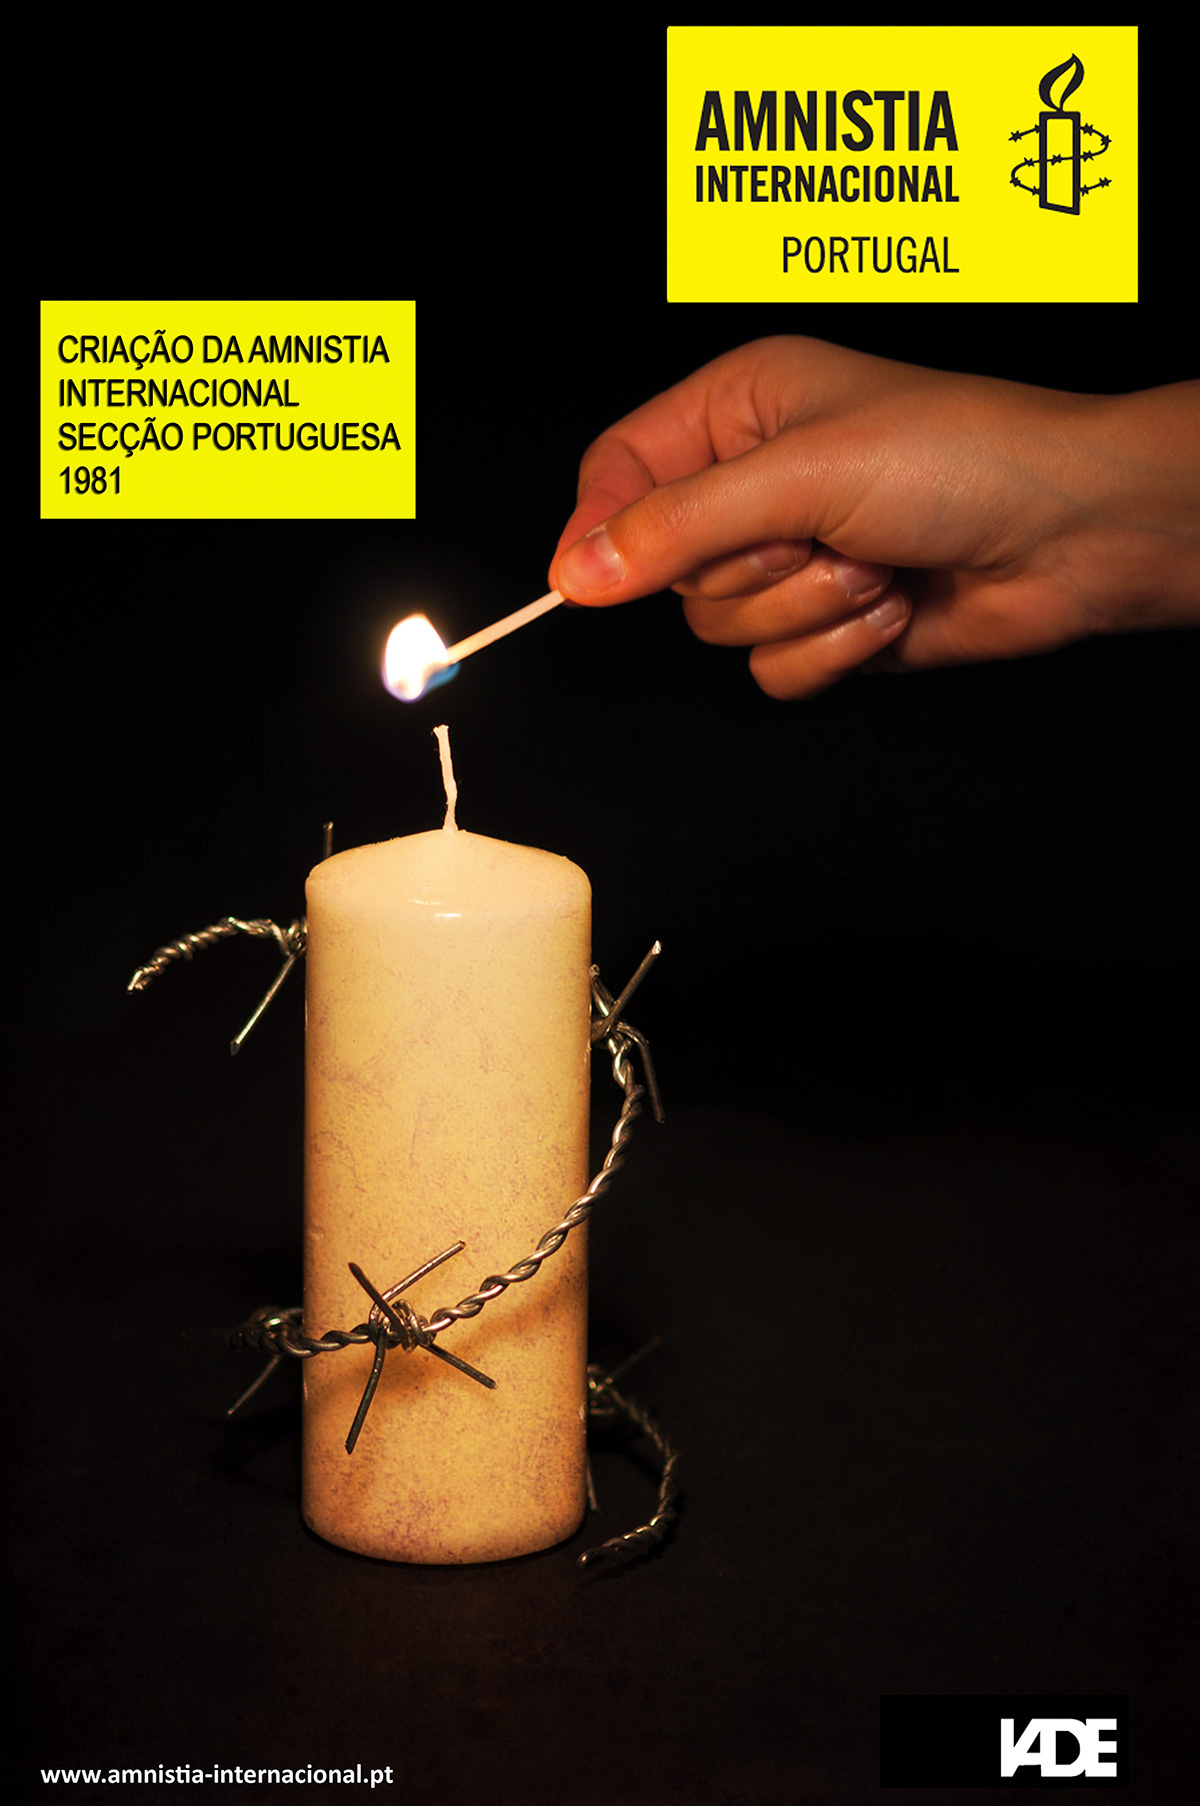 international amnesty amnistia internacional  Porstuga  posters  anniversary